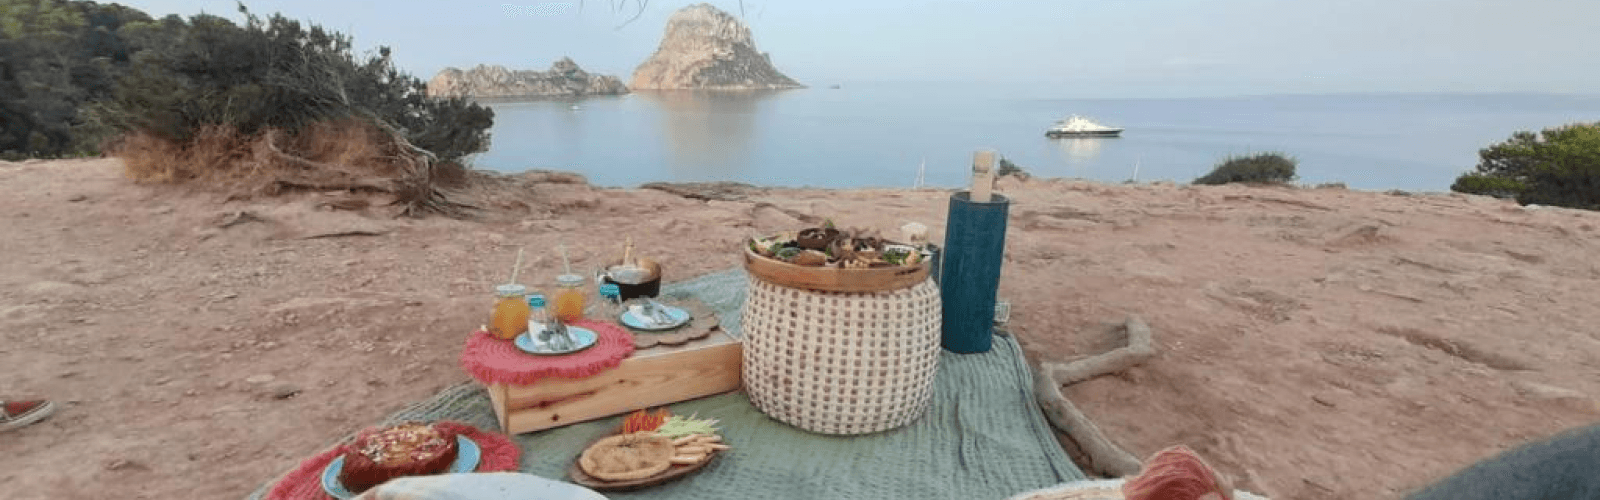 best picnic places ibiza